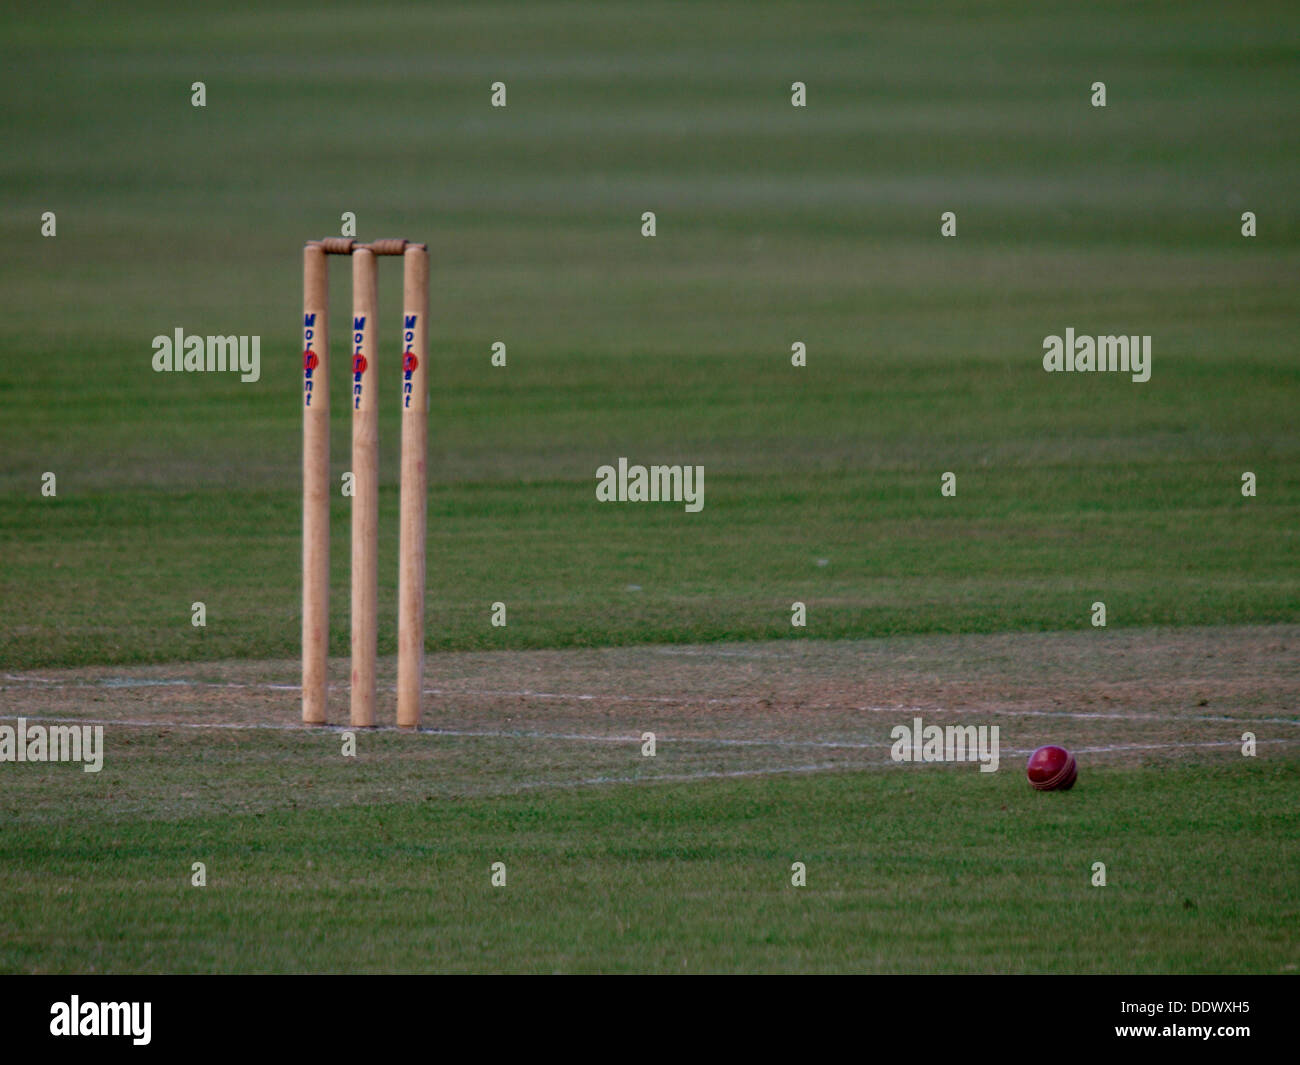 Cricket stumps and ball, UK 2013 Stock Photo